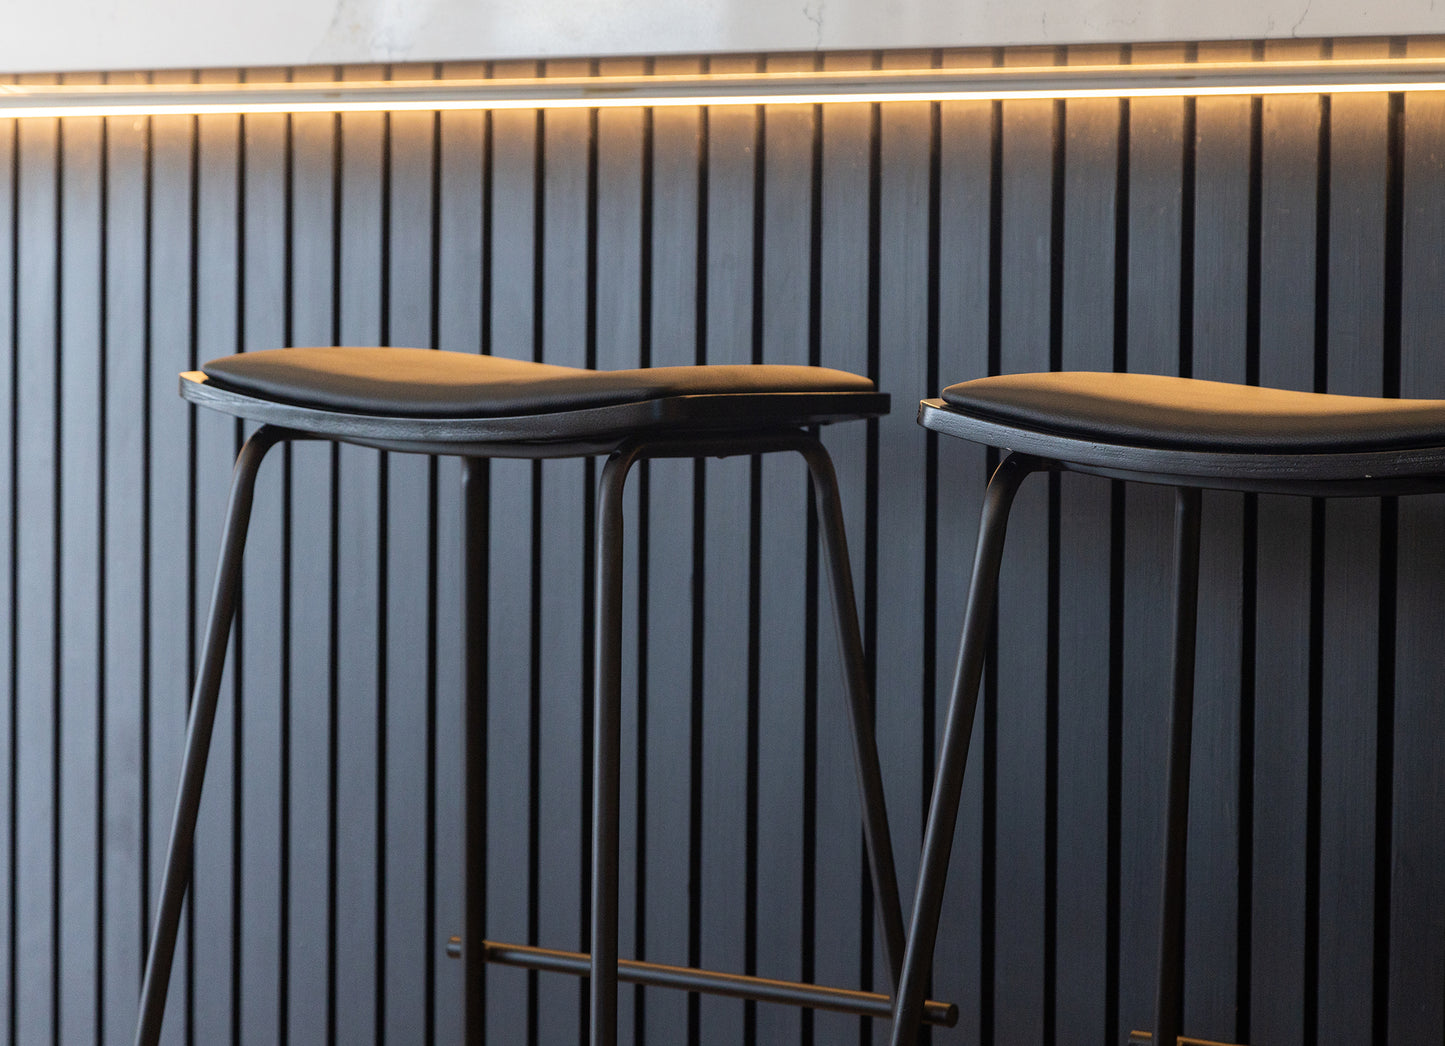 Minimalist bar stool black 67cm